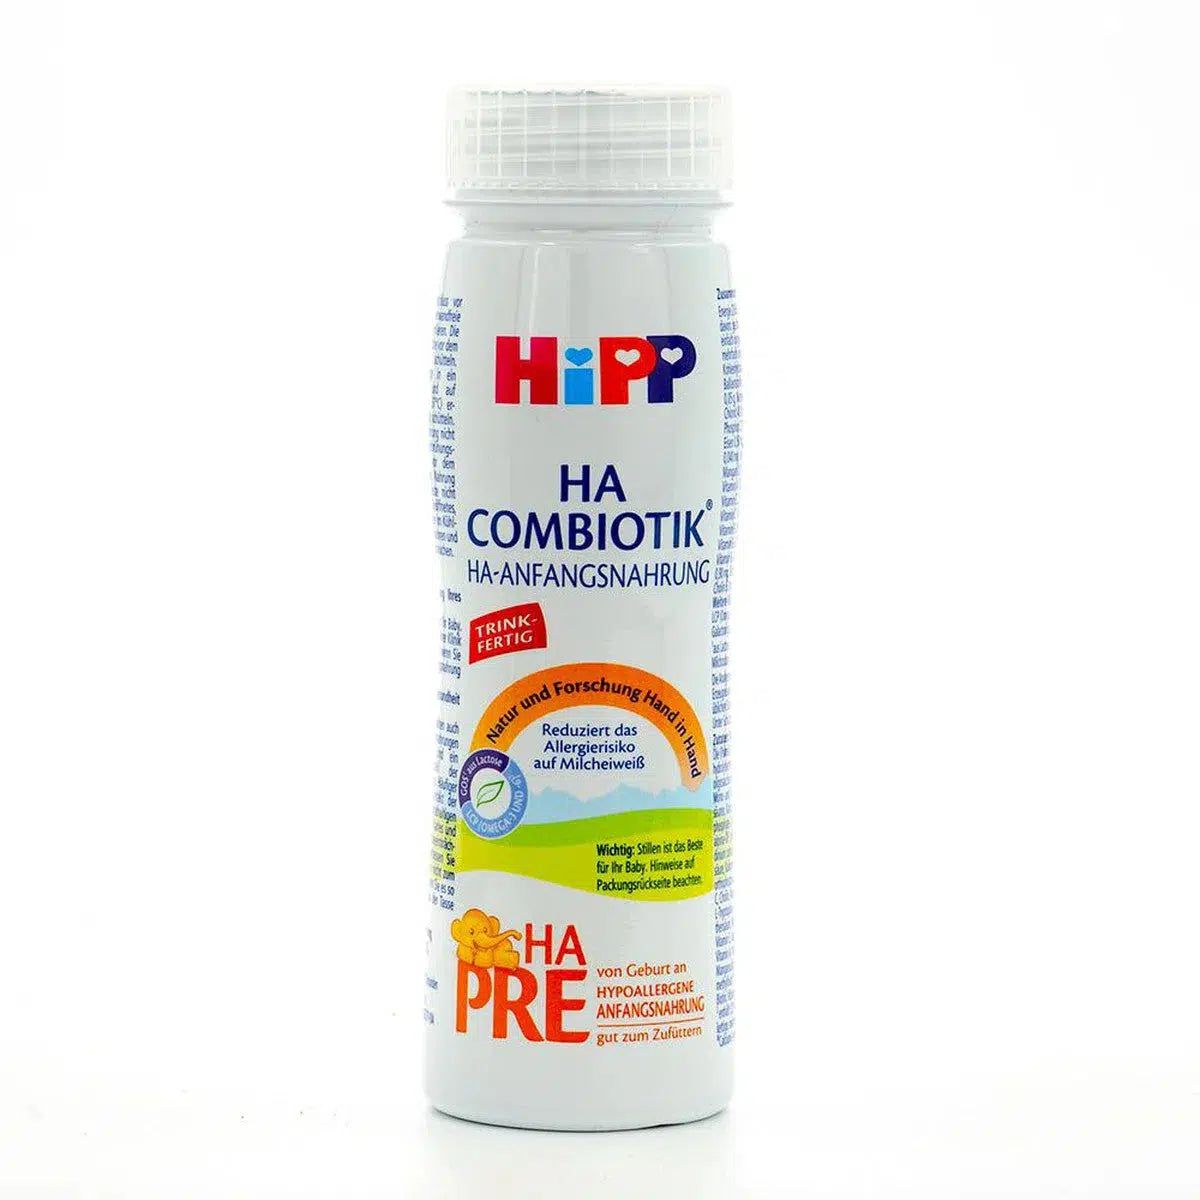 HiPP HA Stage PRE Ready to Feed Formula (200ml) - 36 Bottles